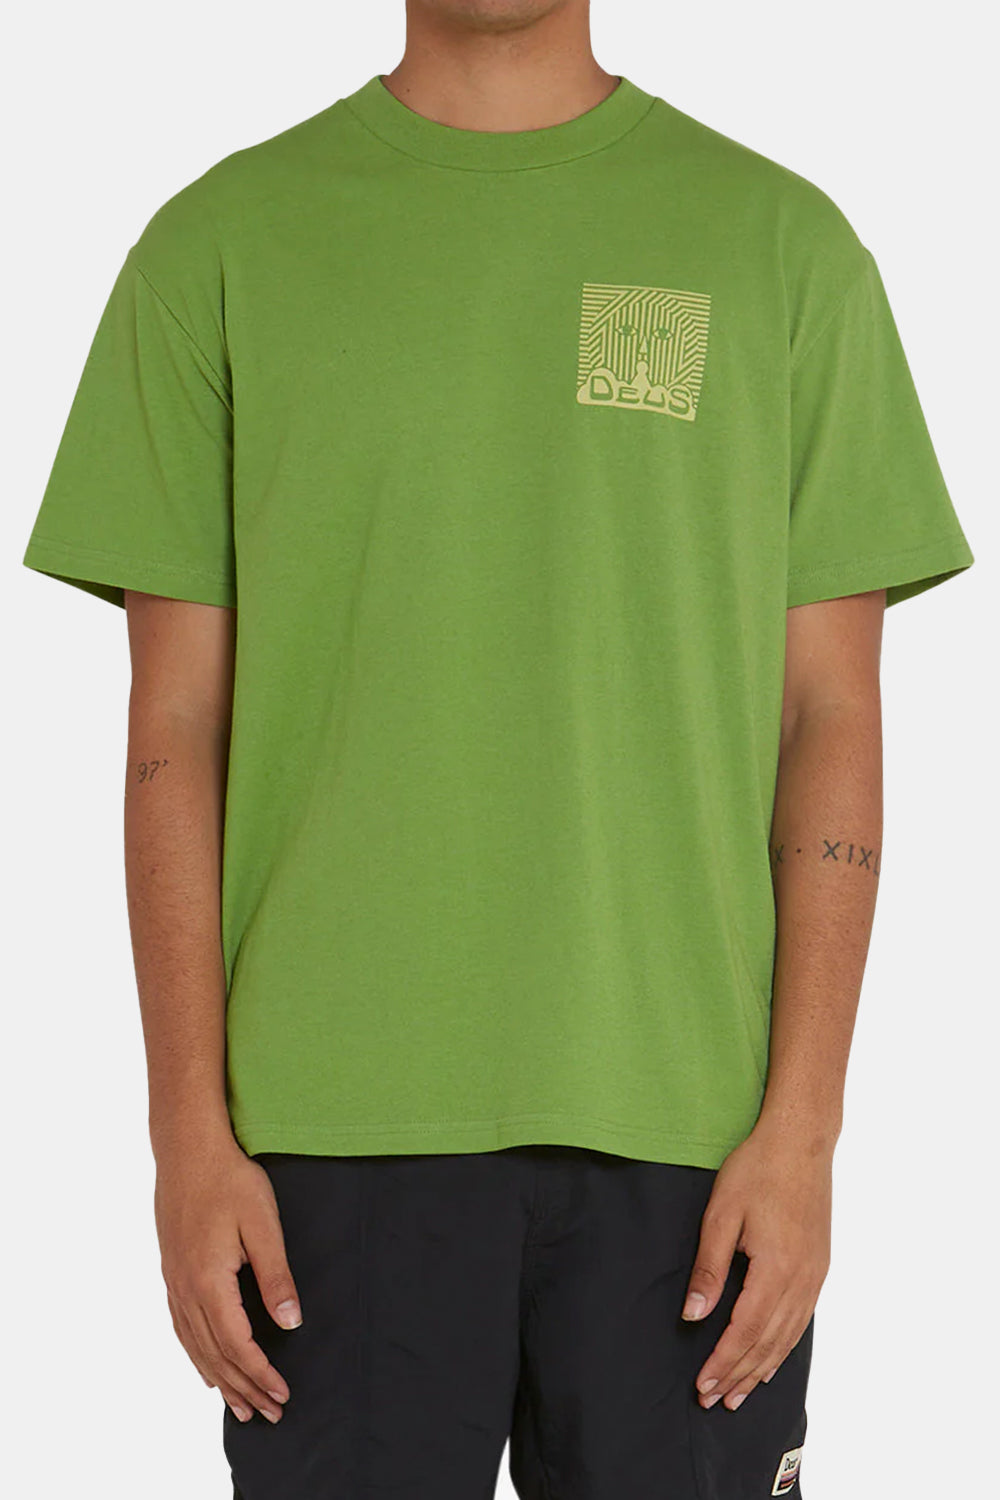 Deus Uv T-Shirt (Camp Green)